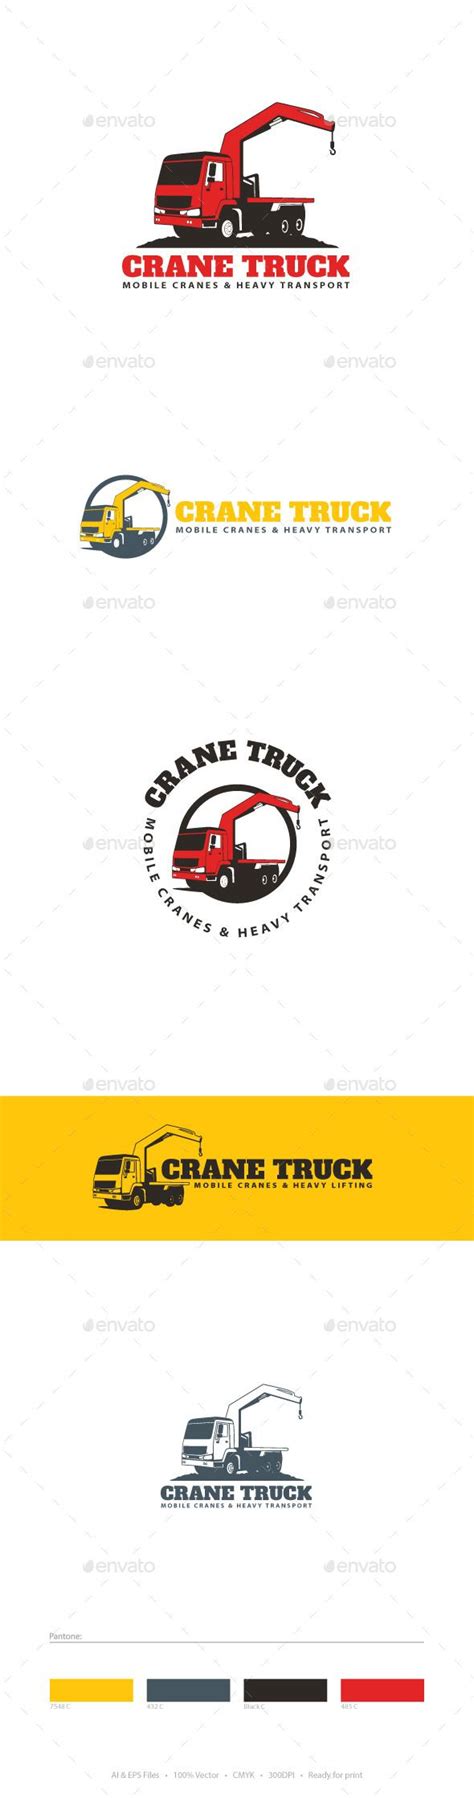 crane truck logo template truck cranes crane logo templates